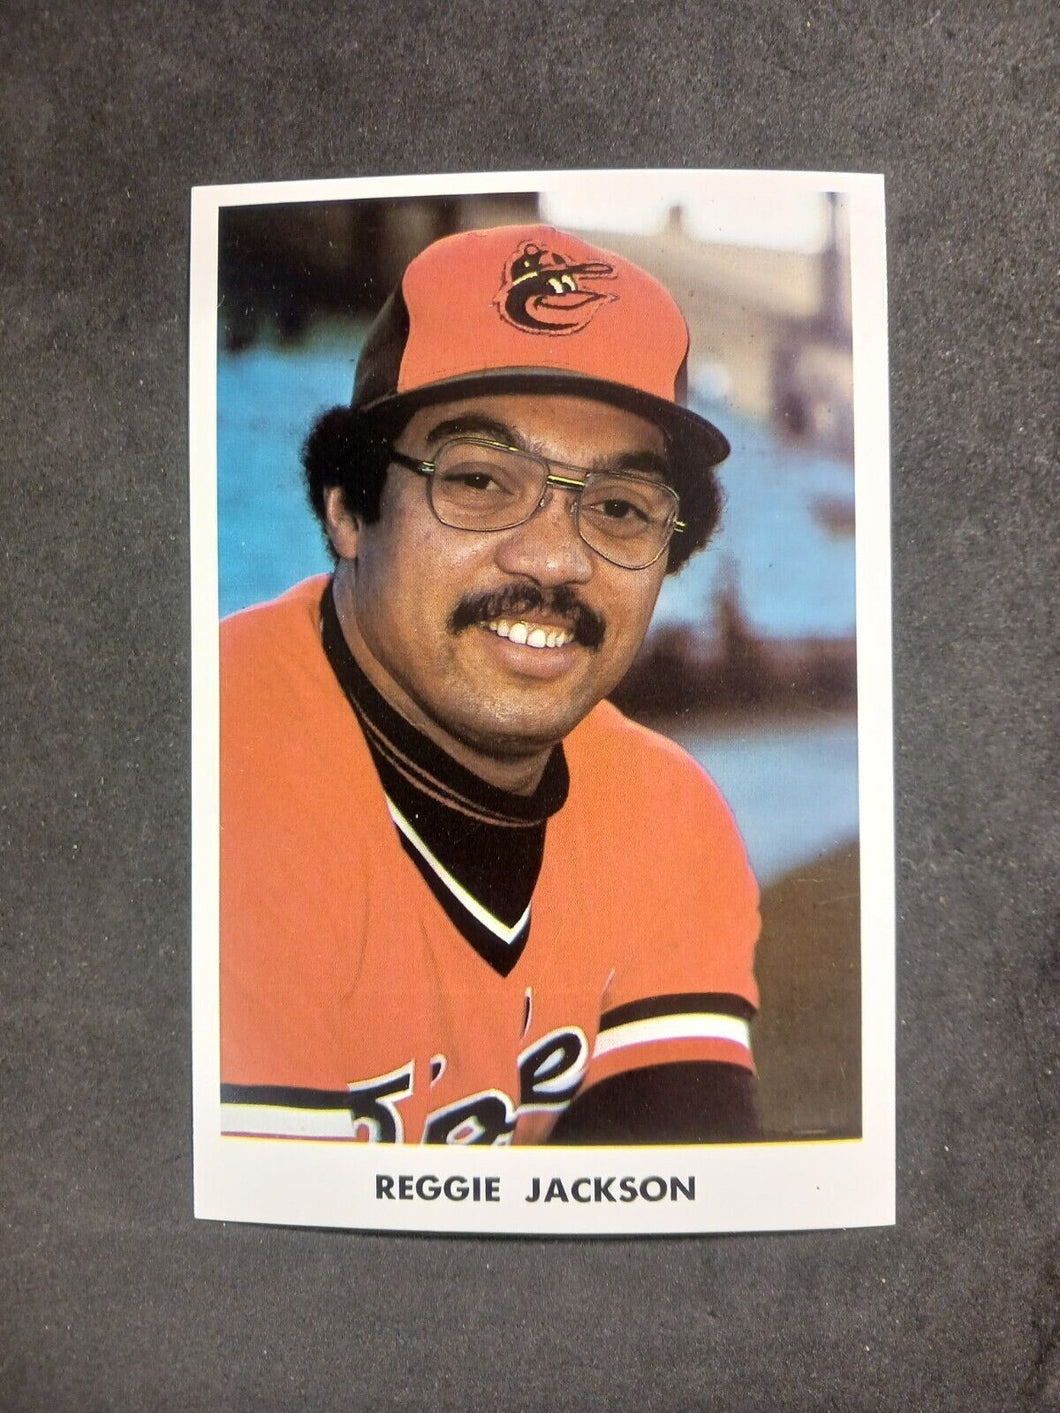 1976 Baltimore Orioles Post Cards Reggie Jackson NR Mint